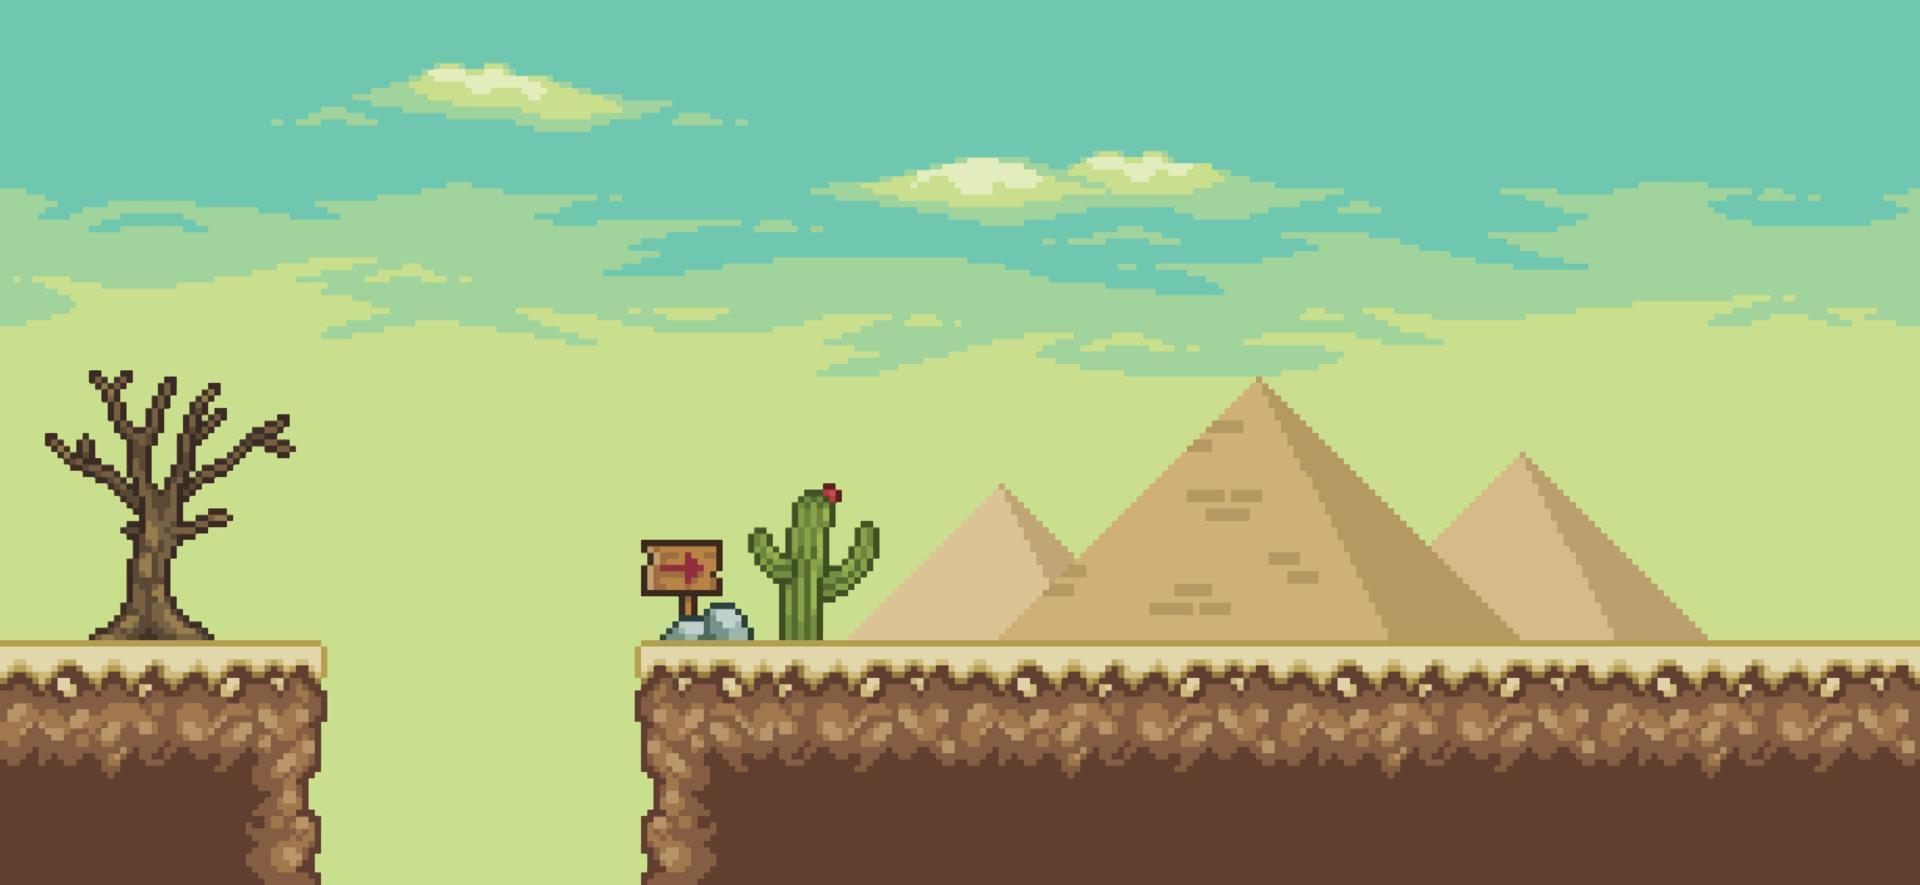 pixel art ökenspelscen med pyramid, kaktusar, trap 8bit landskapsbakgrund vektor